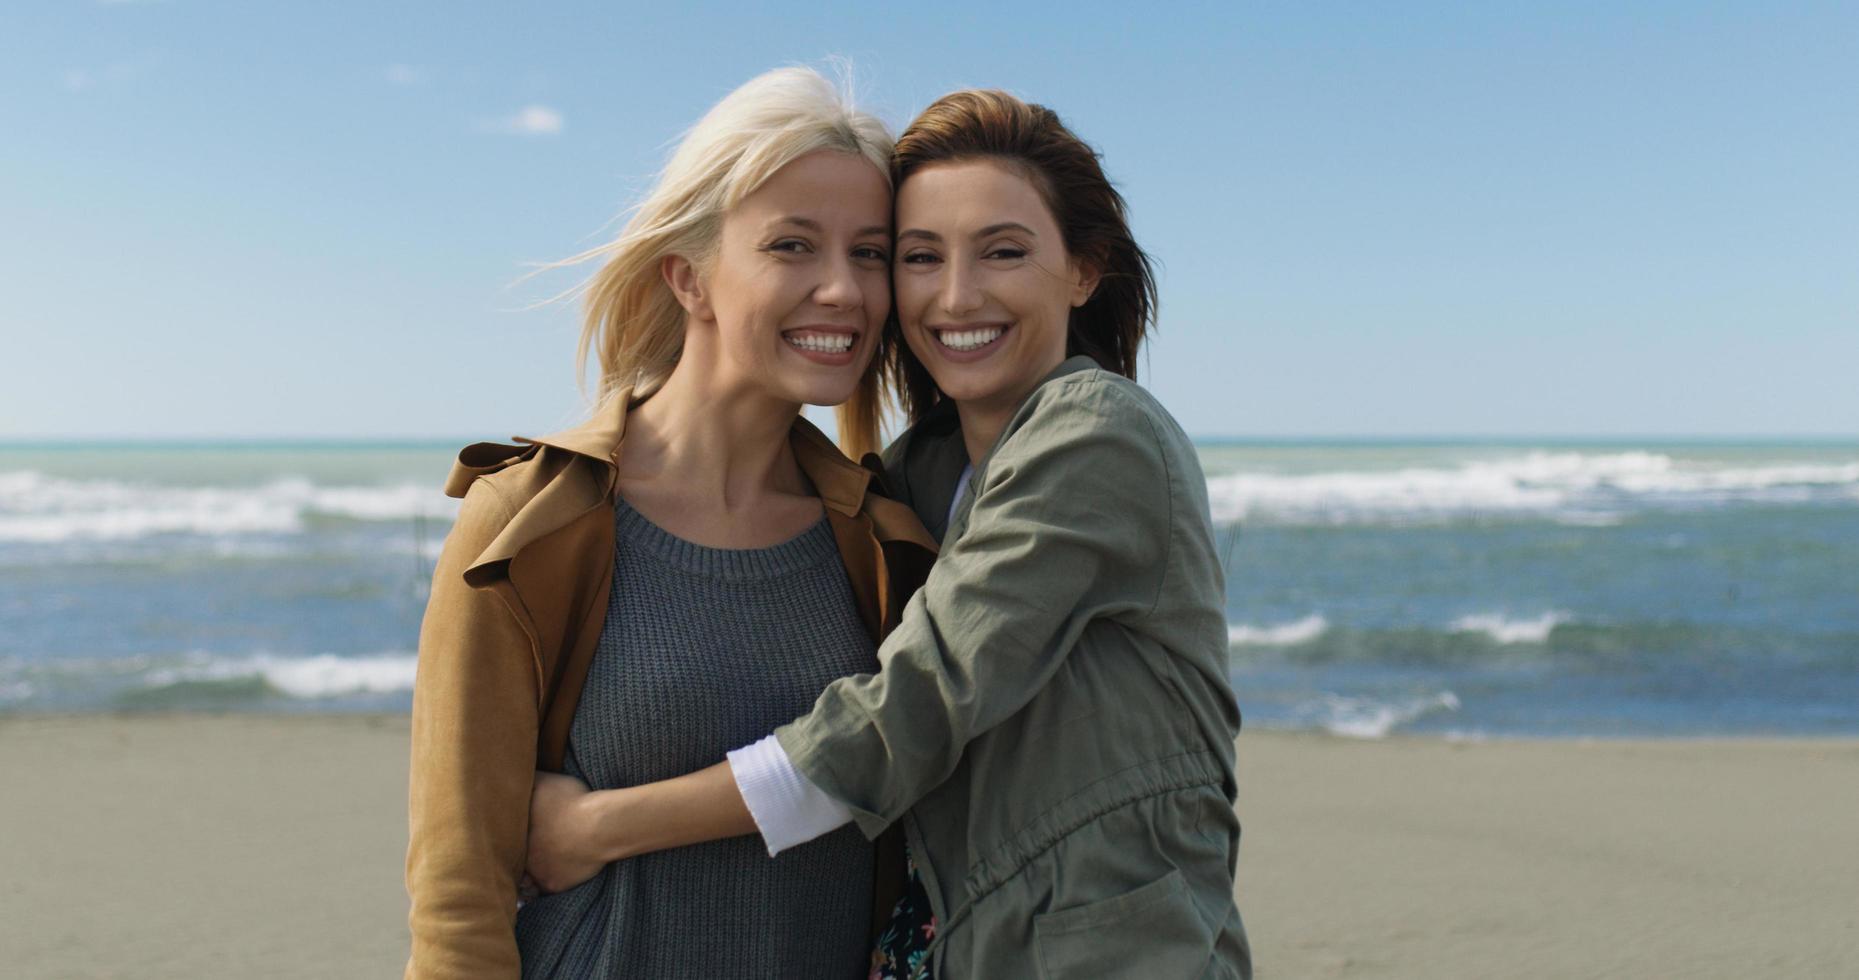 mulheres sorrindo e curtindo a vida na praia foto